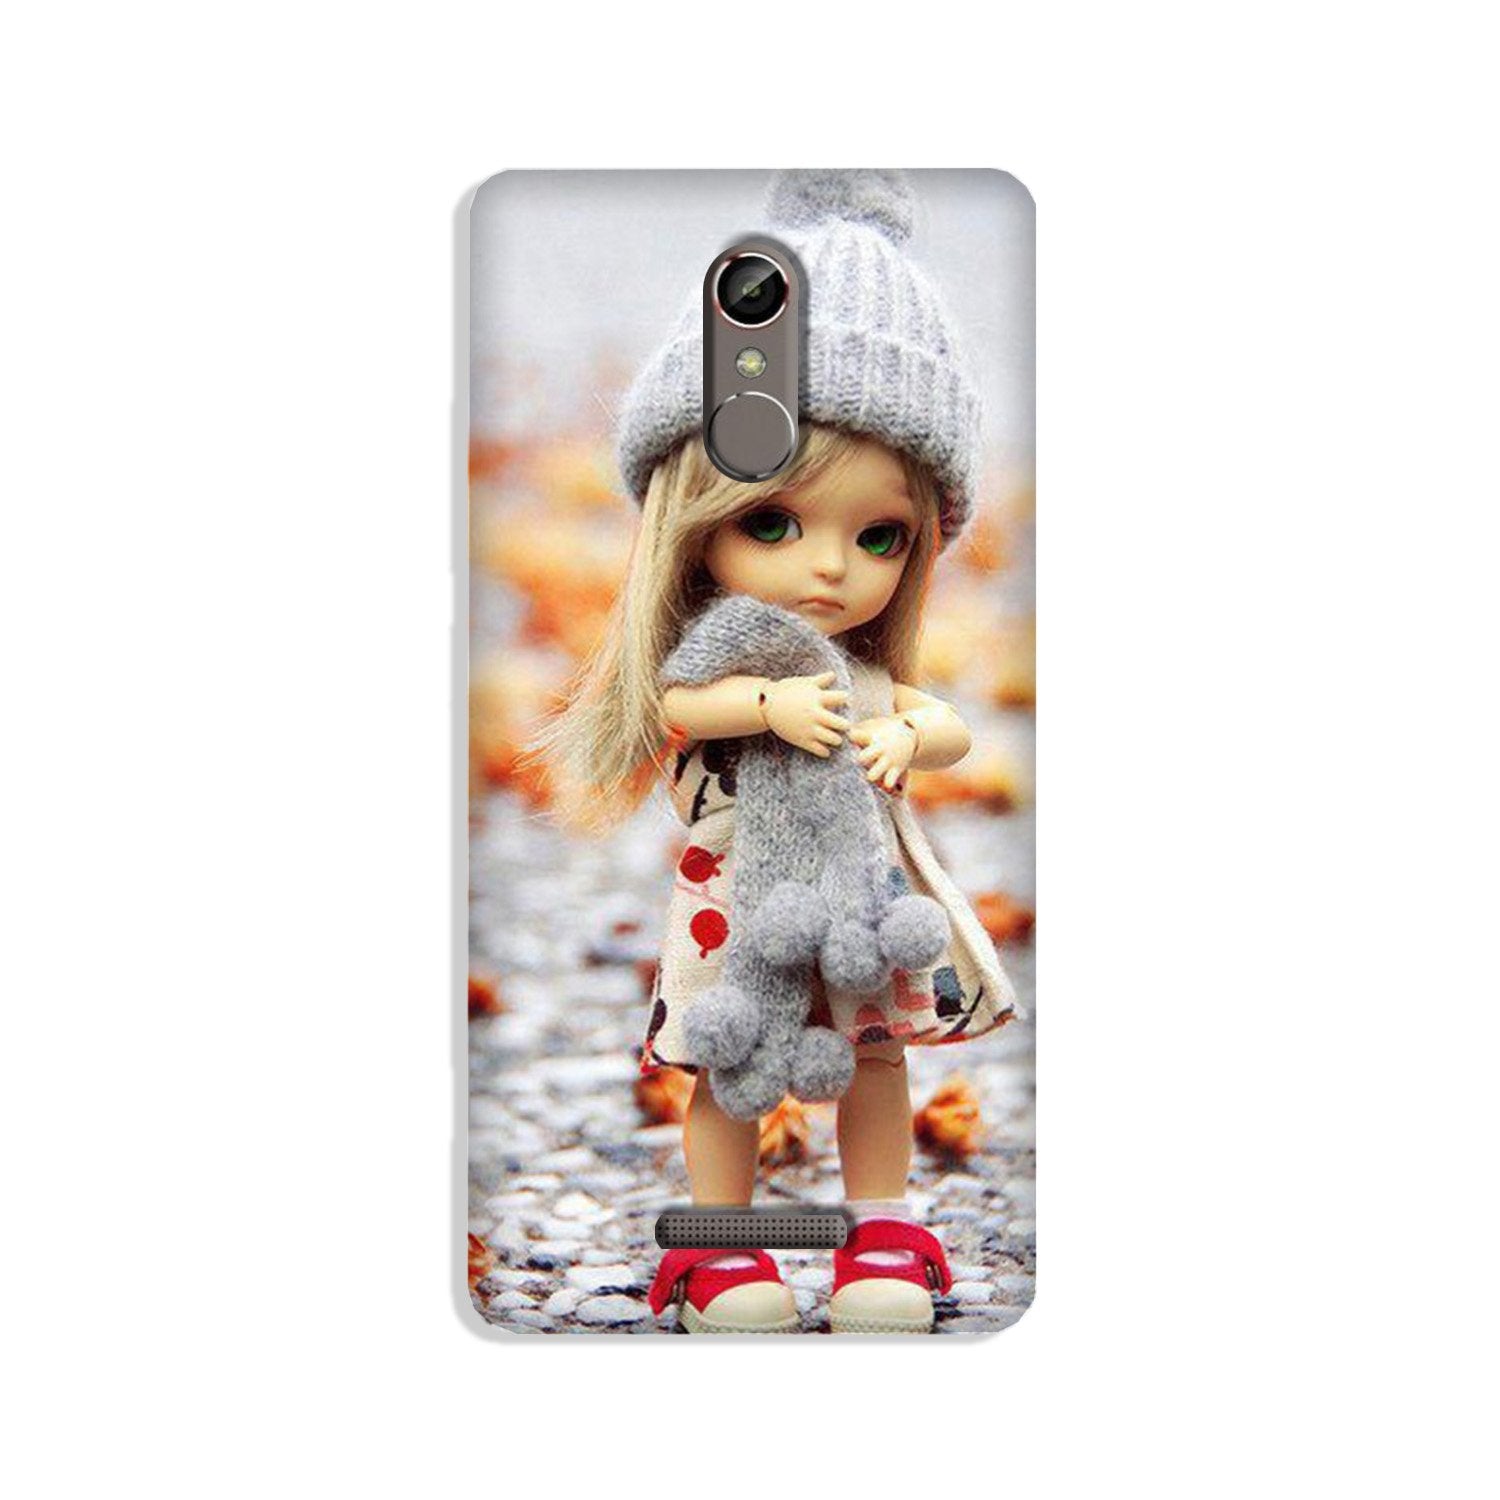 Cute Doll Case for Redmi Note 3